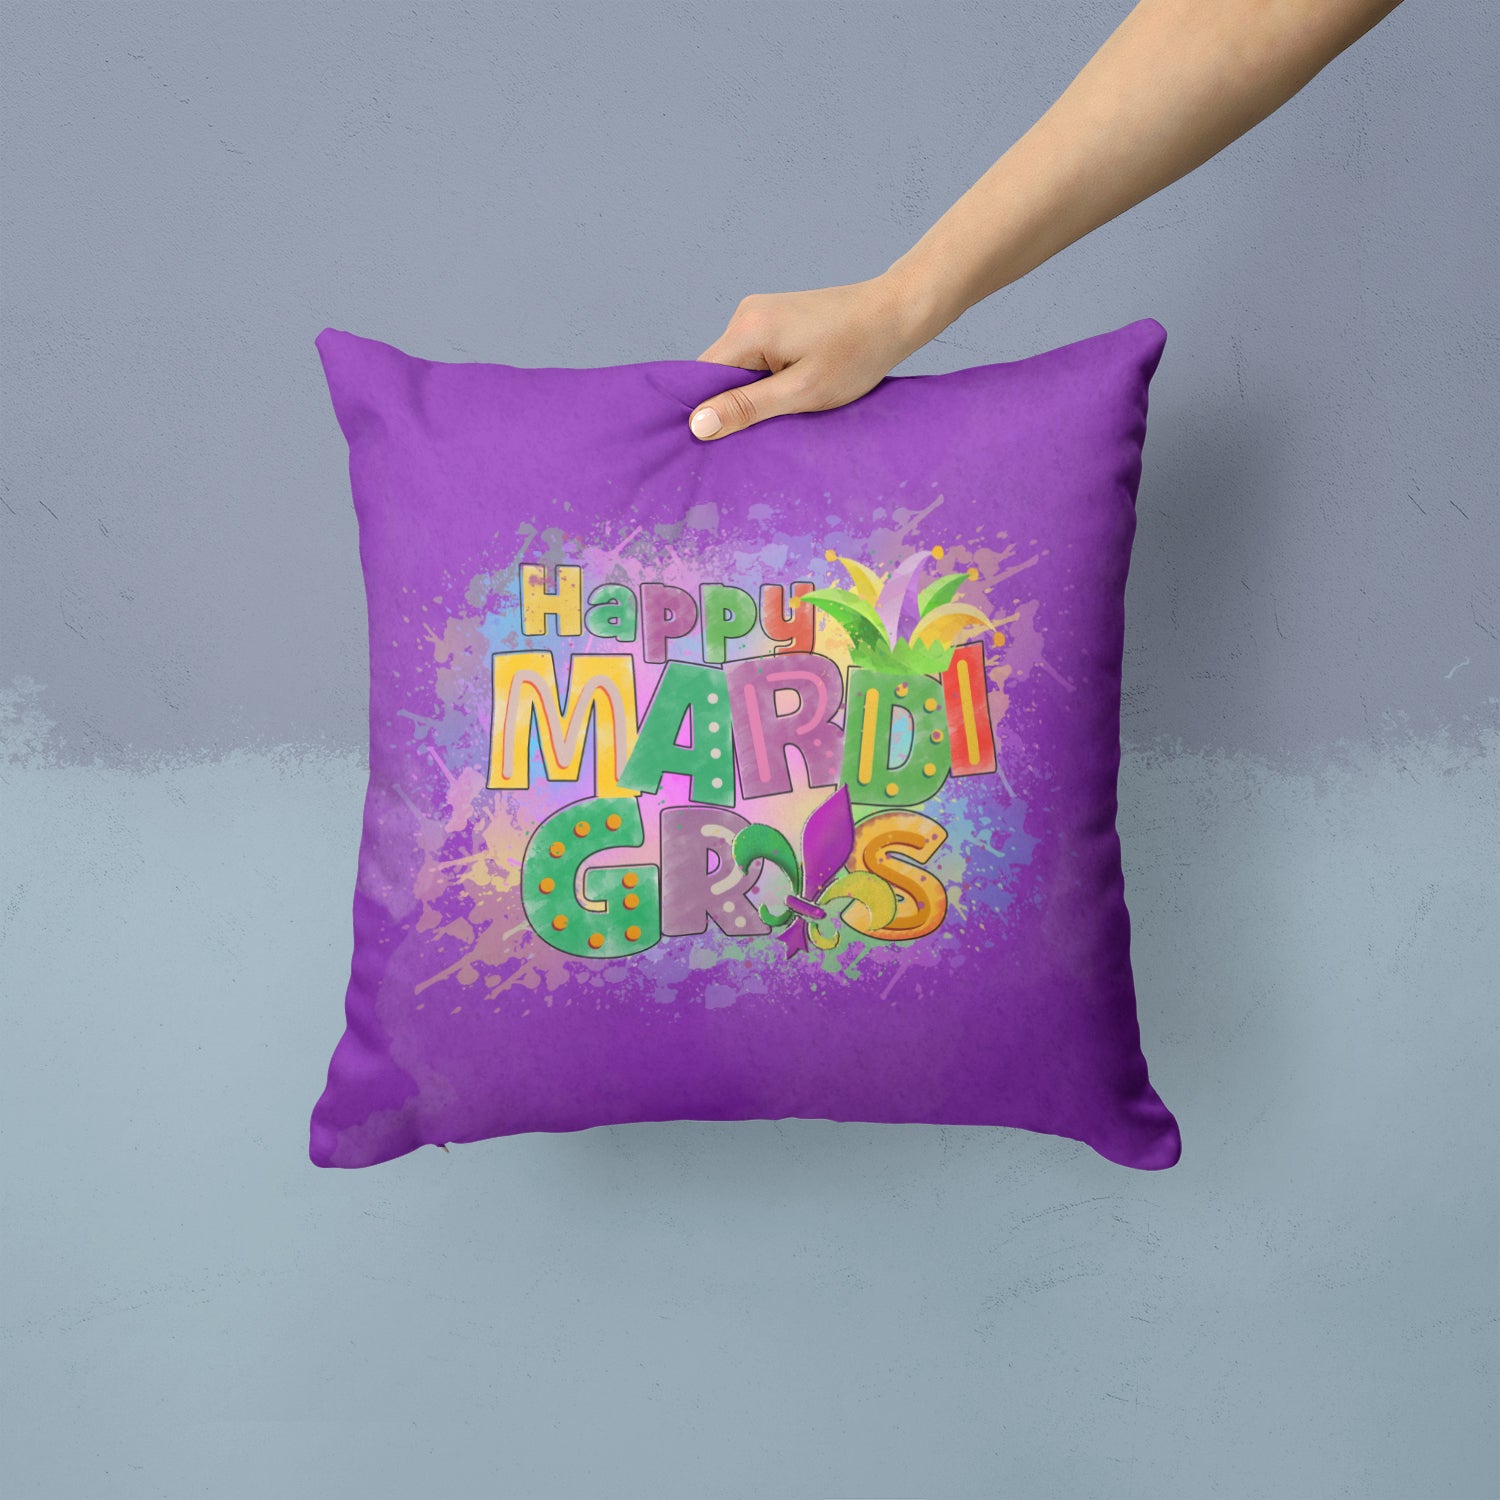 Buy this Happy Mardi Gras Fabric Decorative Pillow